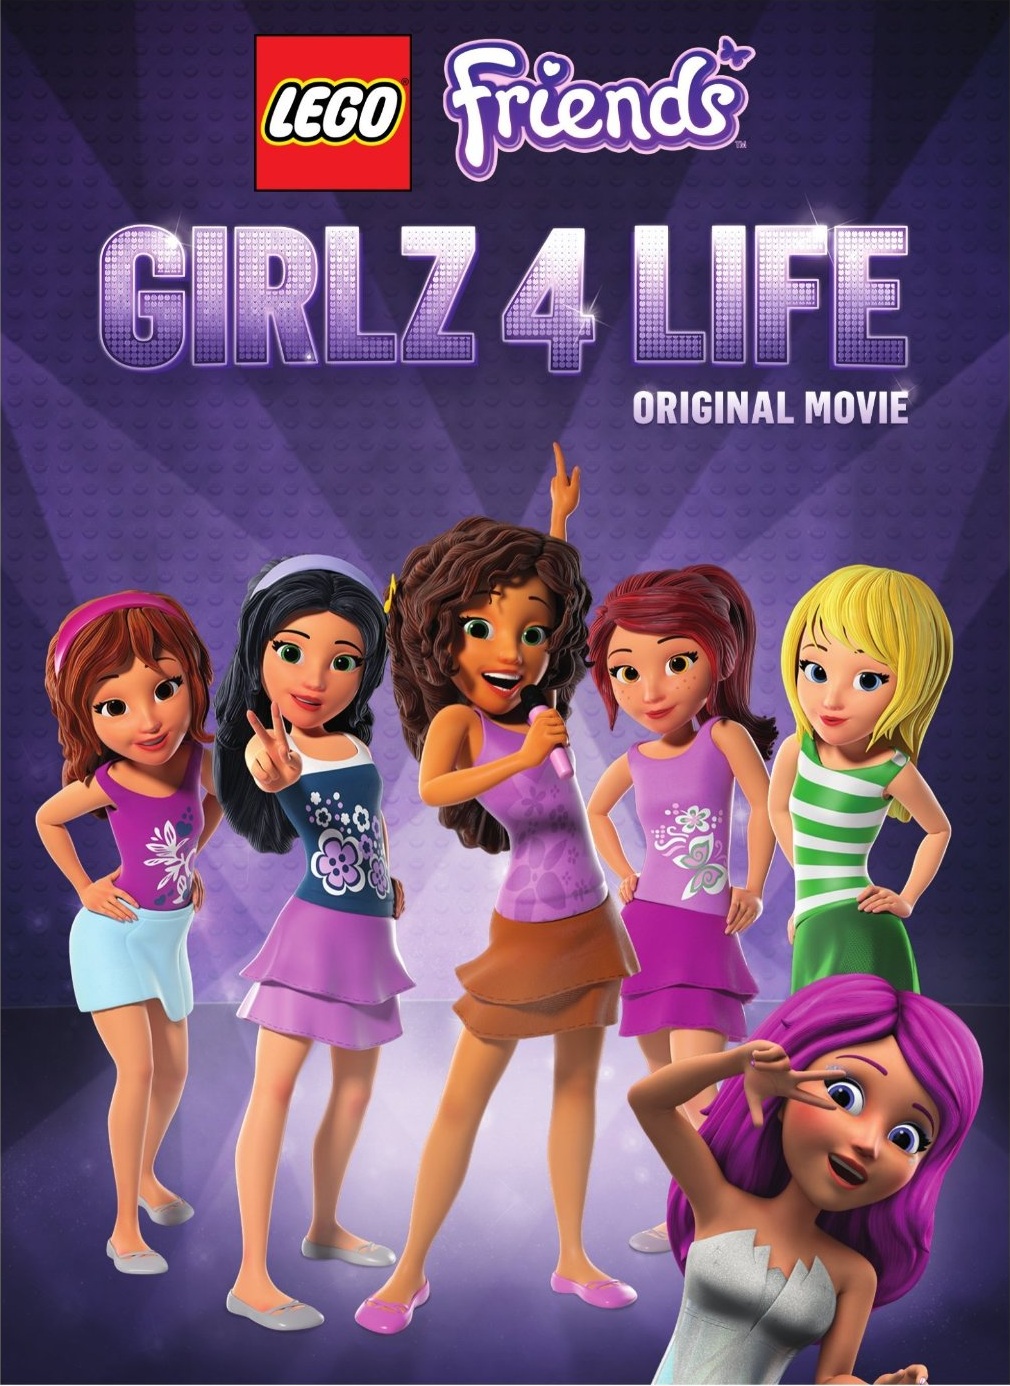 LEGO Friends Girlz 4 Life 2016 - Full (HD)